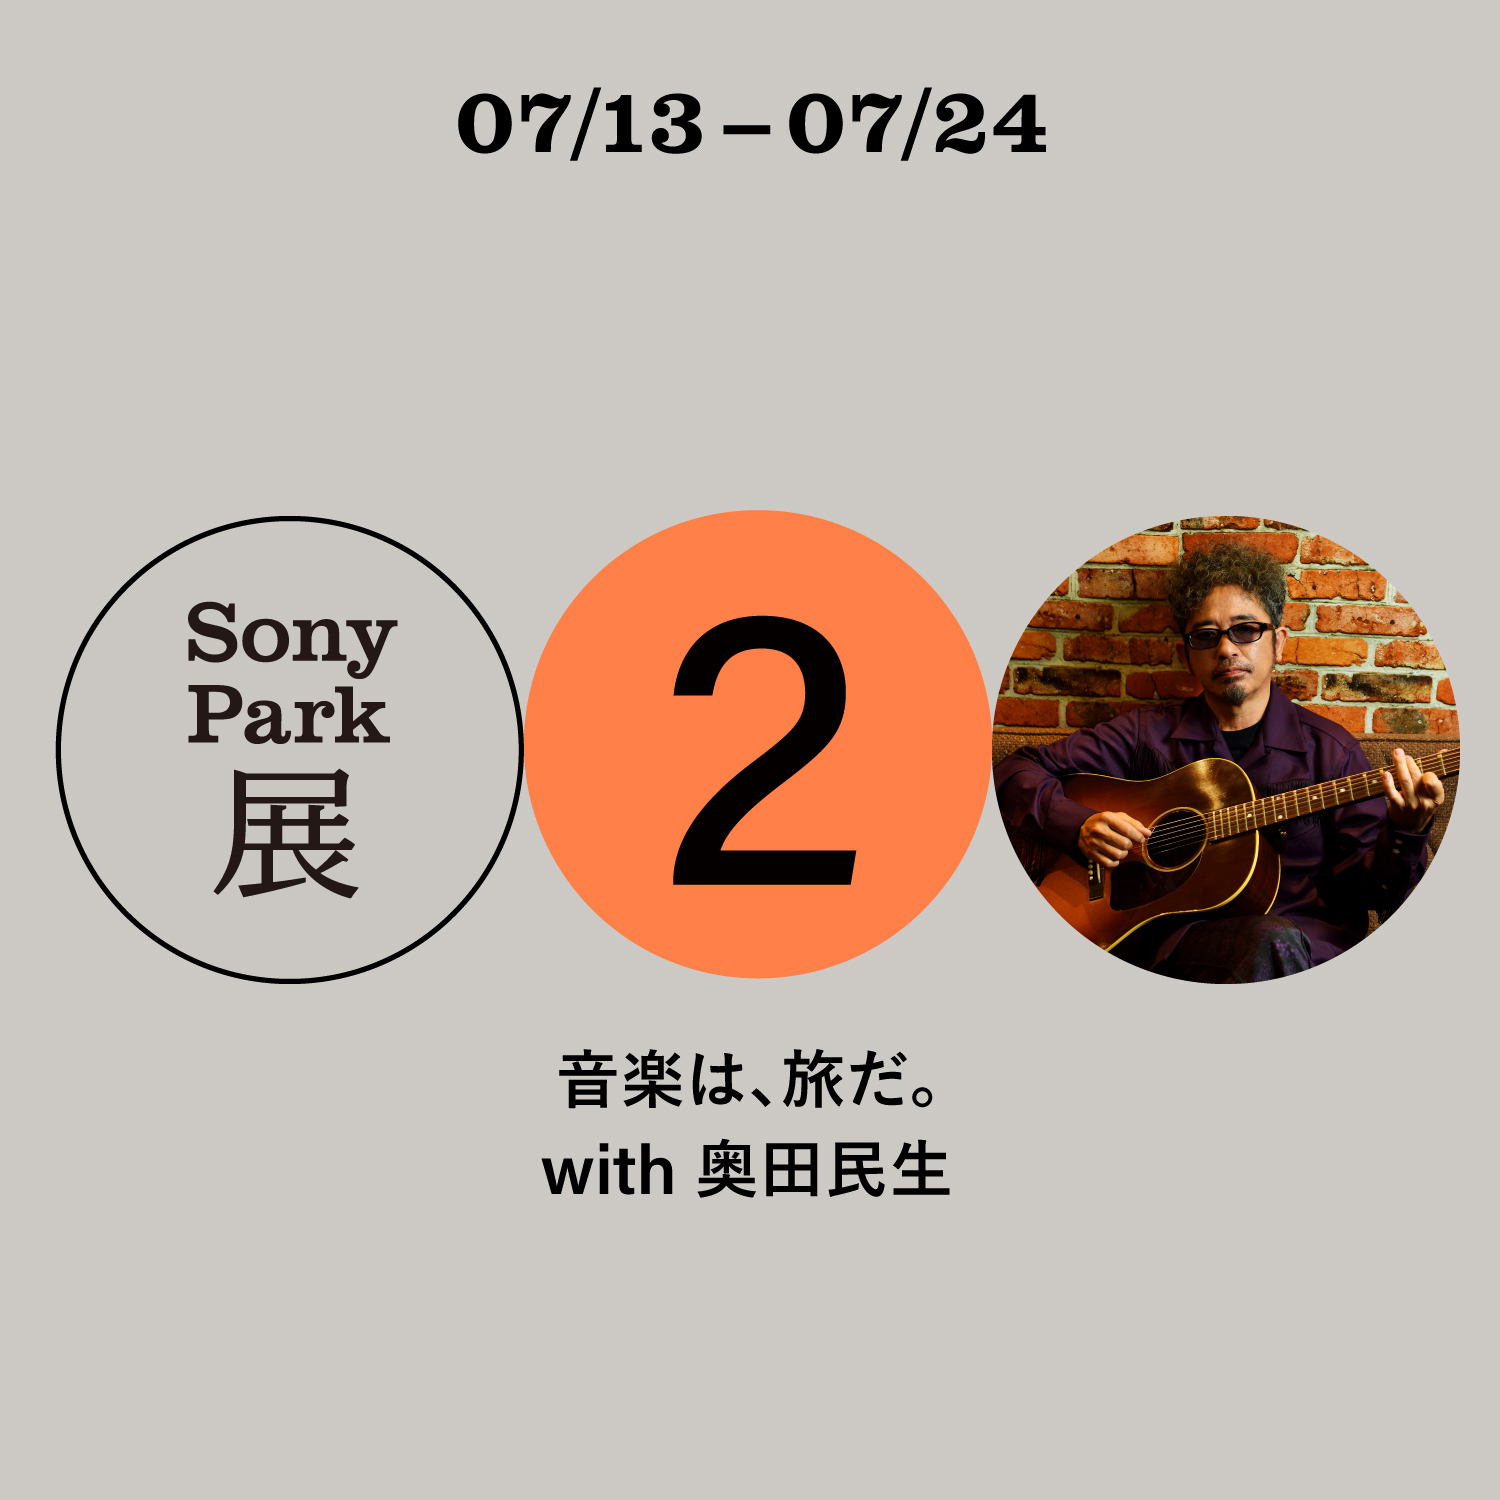 Sony Park Exhibition ②MUSIC with Tamio Okuda